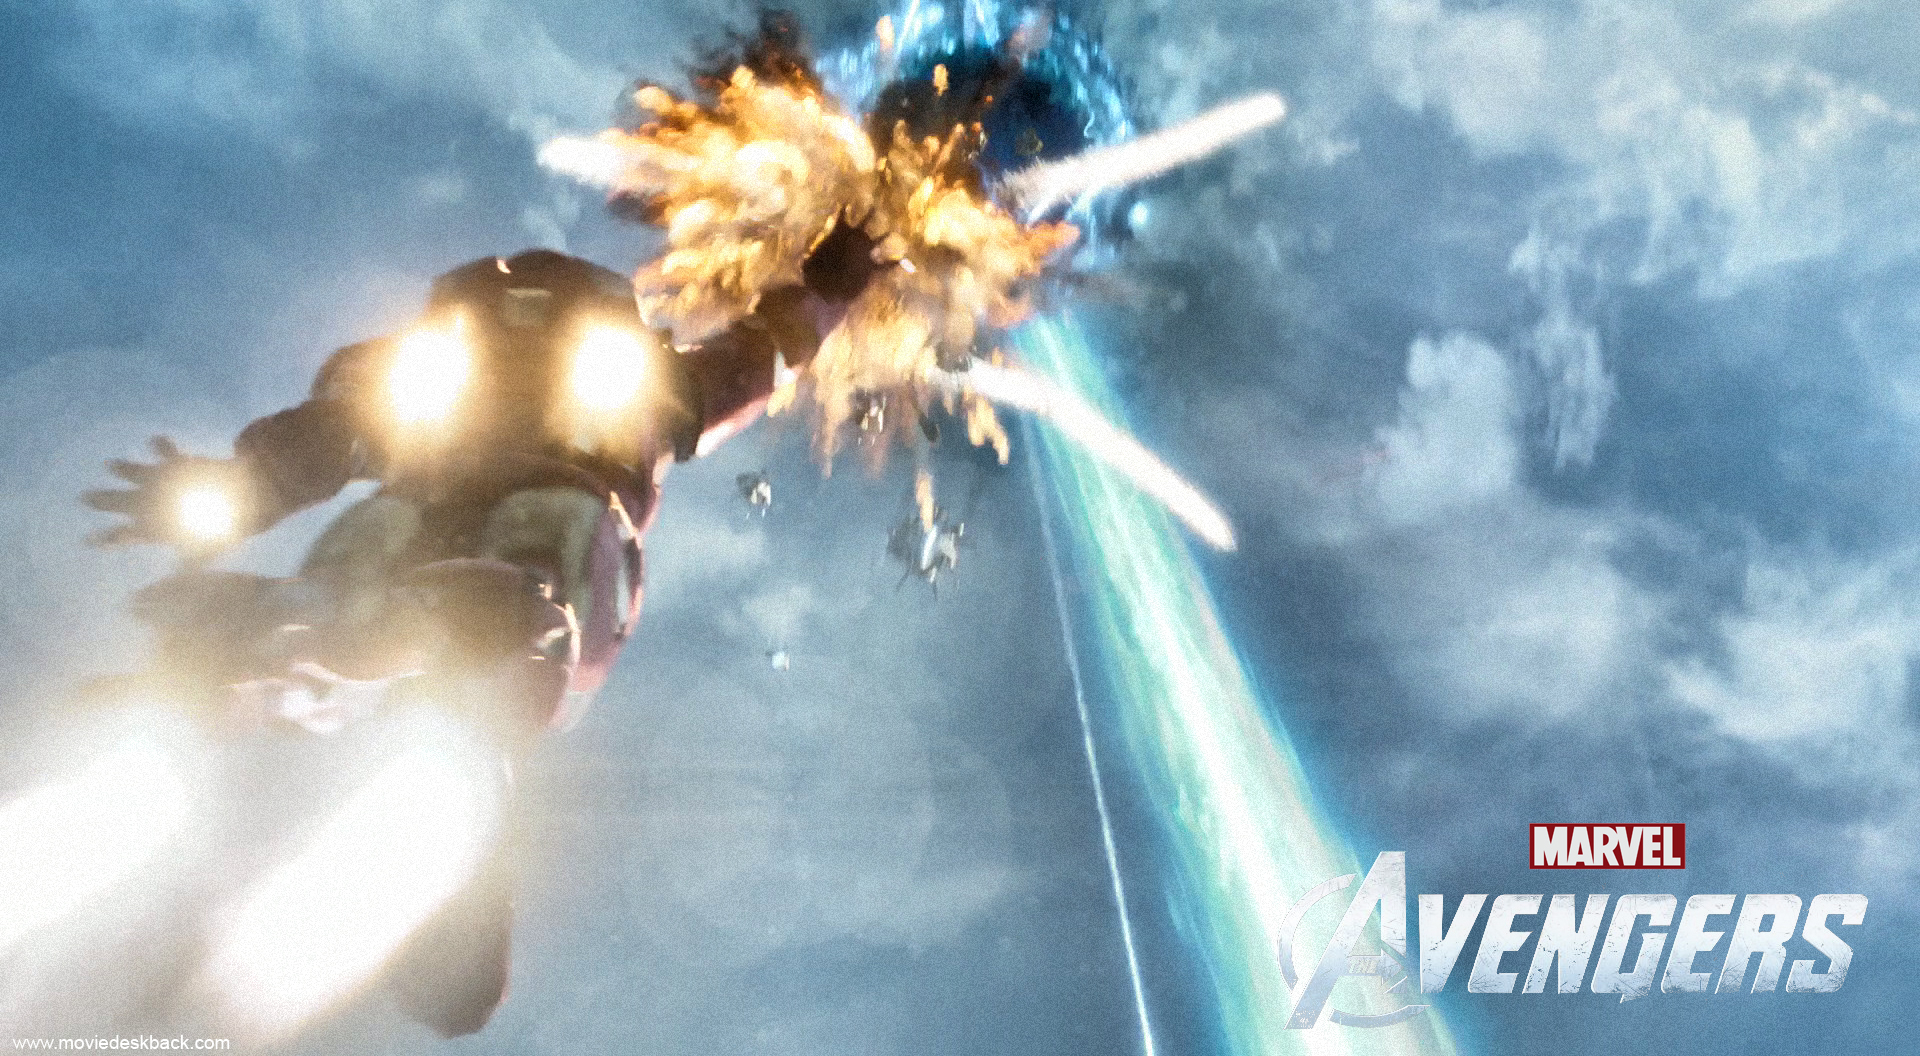 The Avengers 2012 Iron Man flying